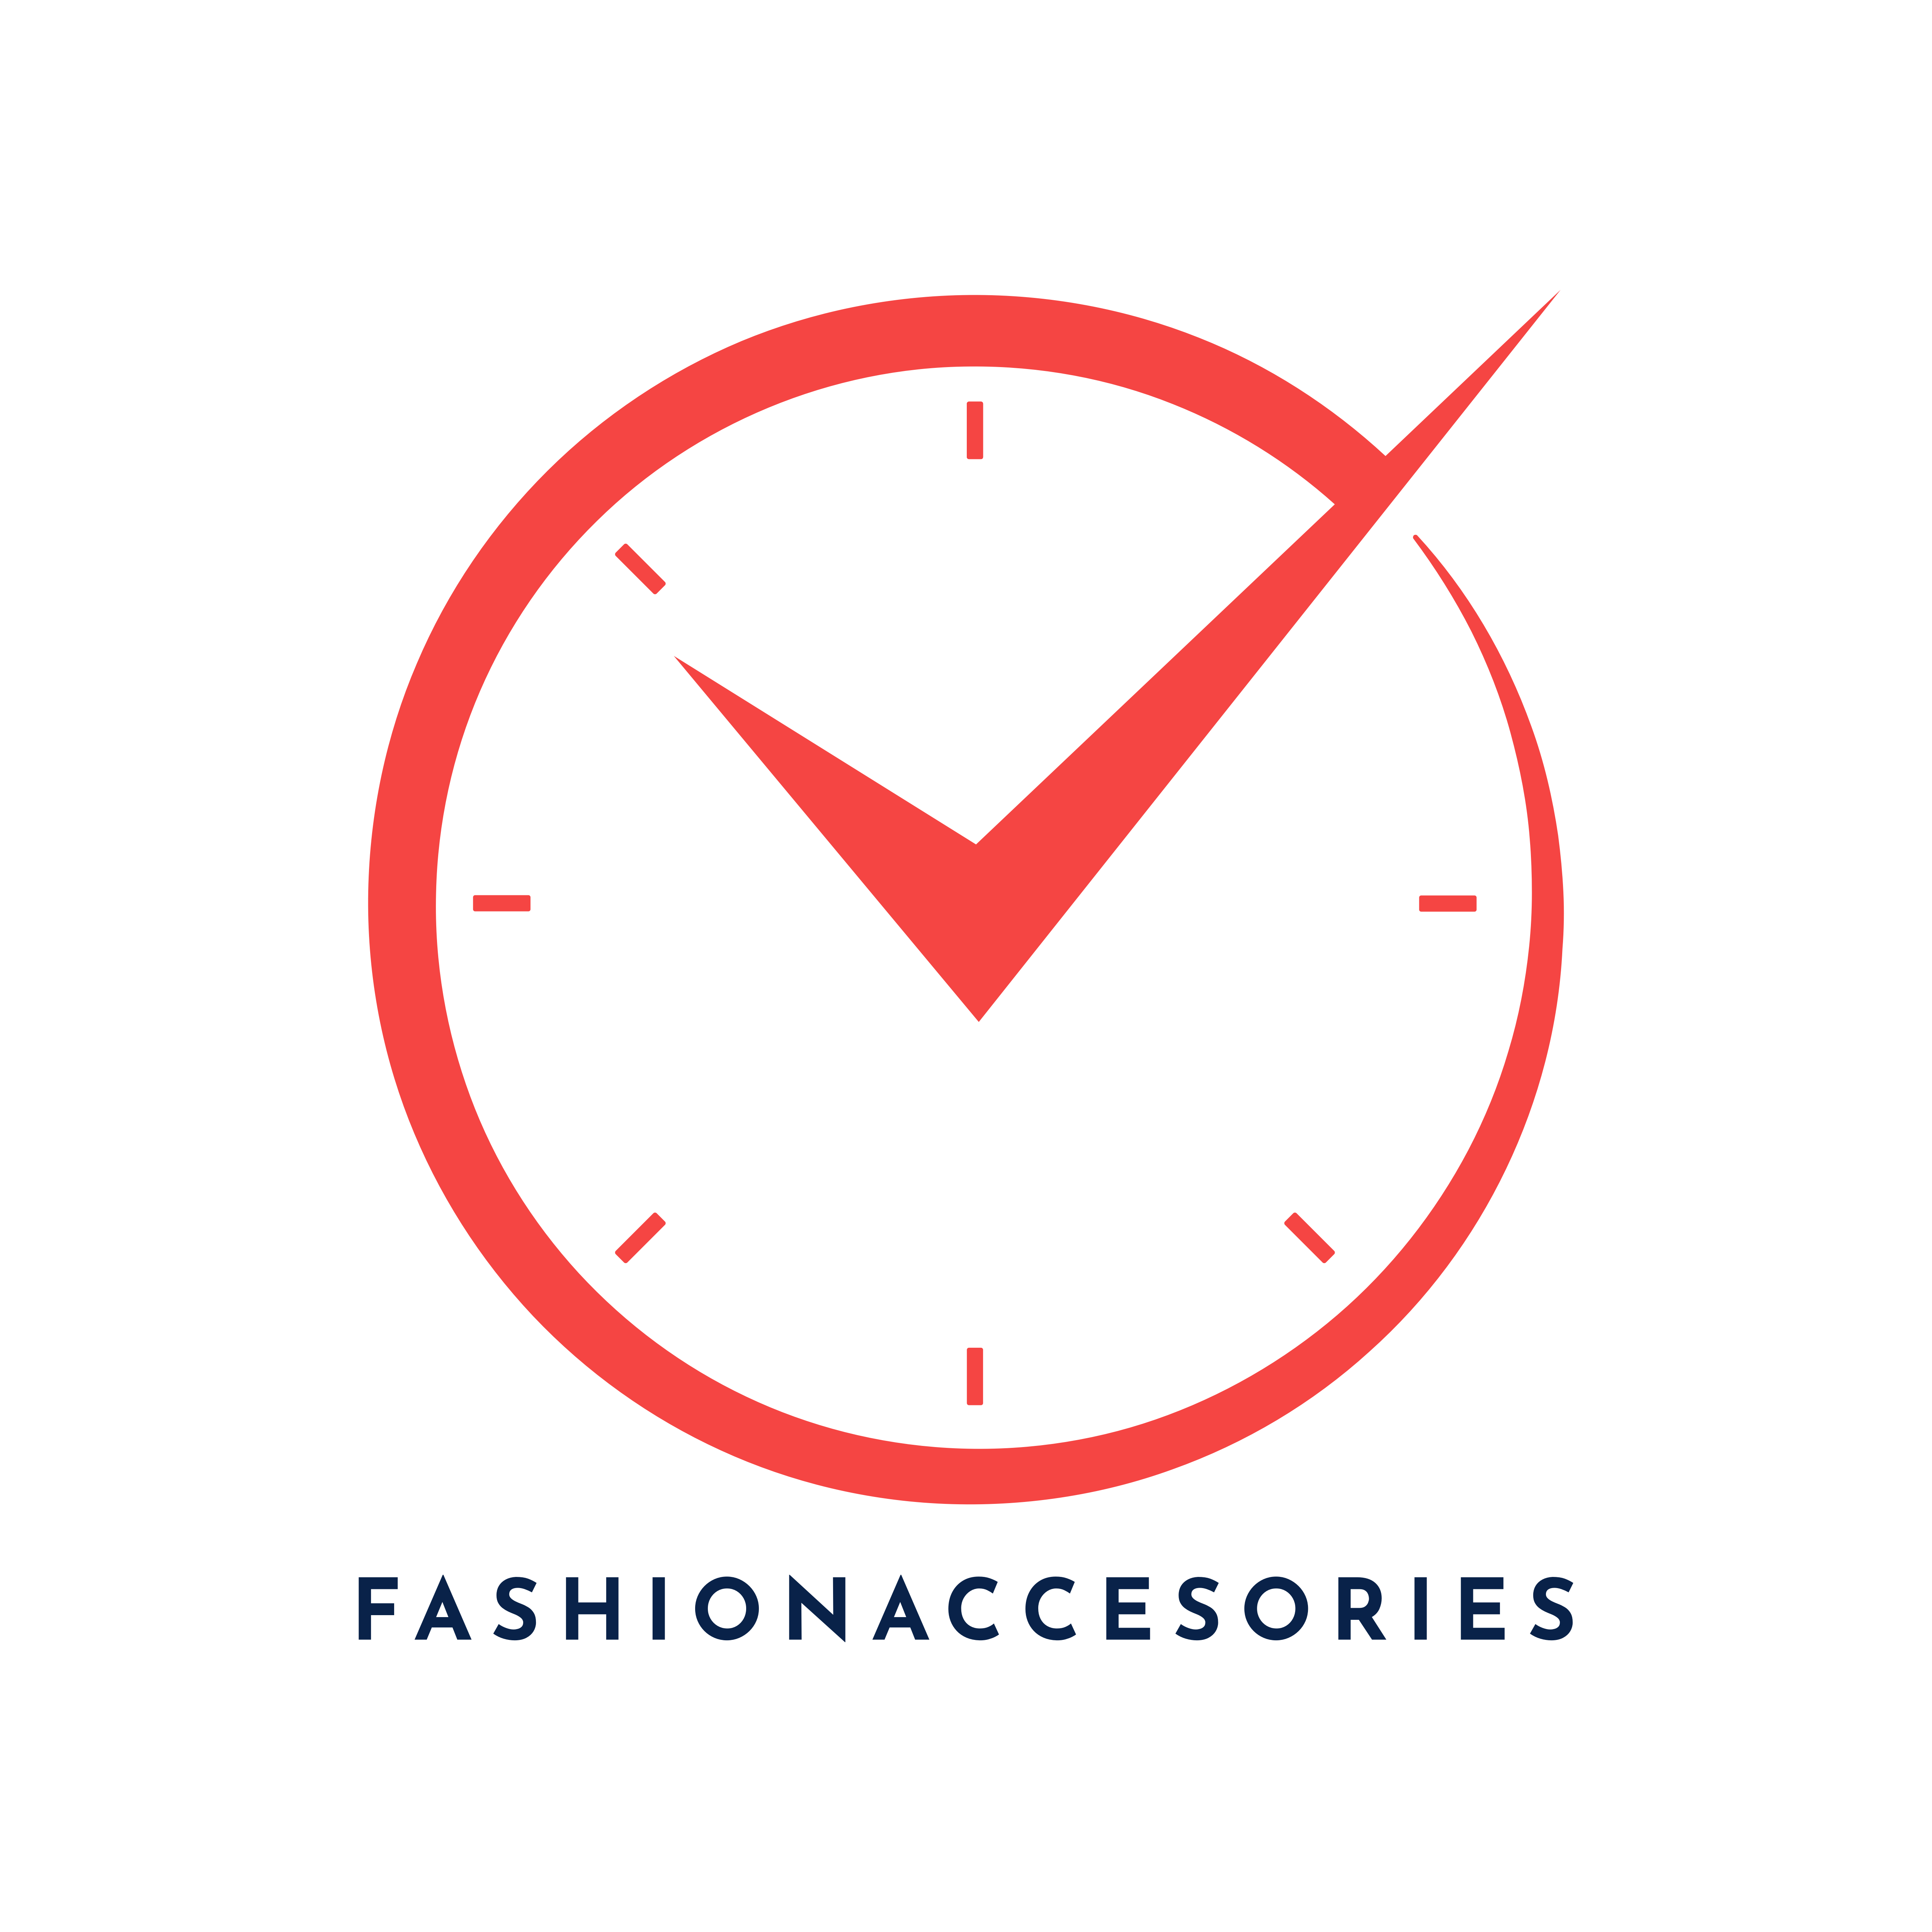 FASHIONACCESORIES Logo